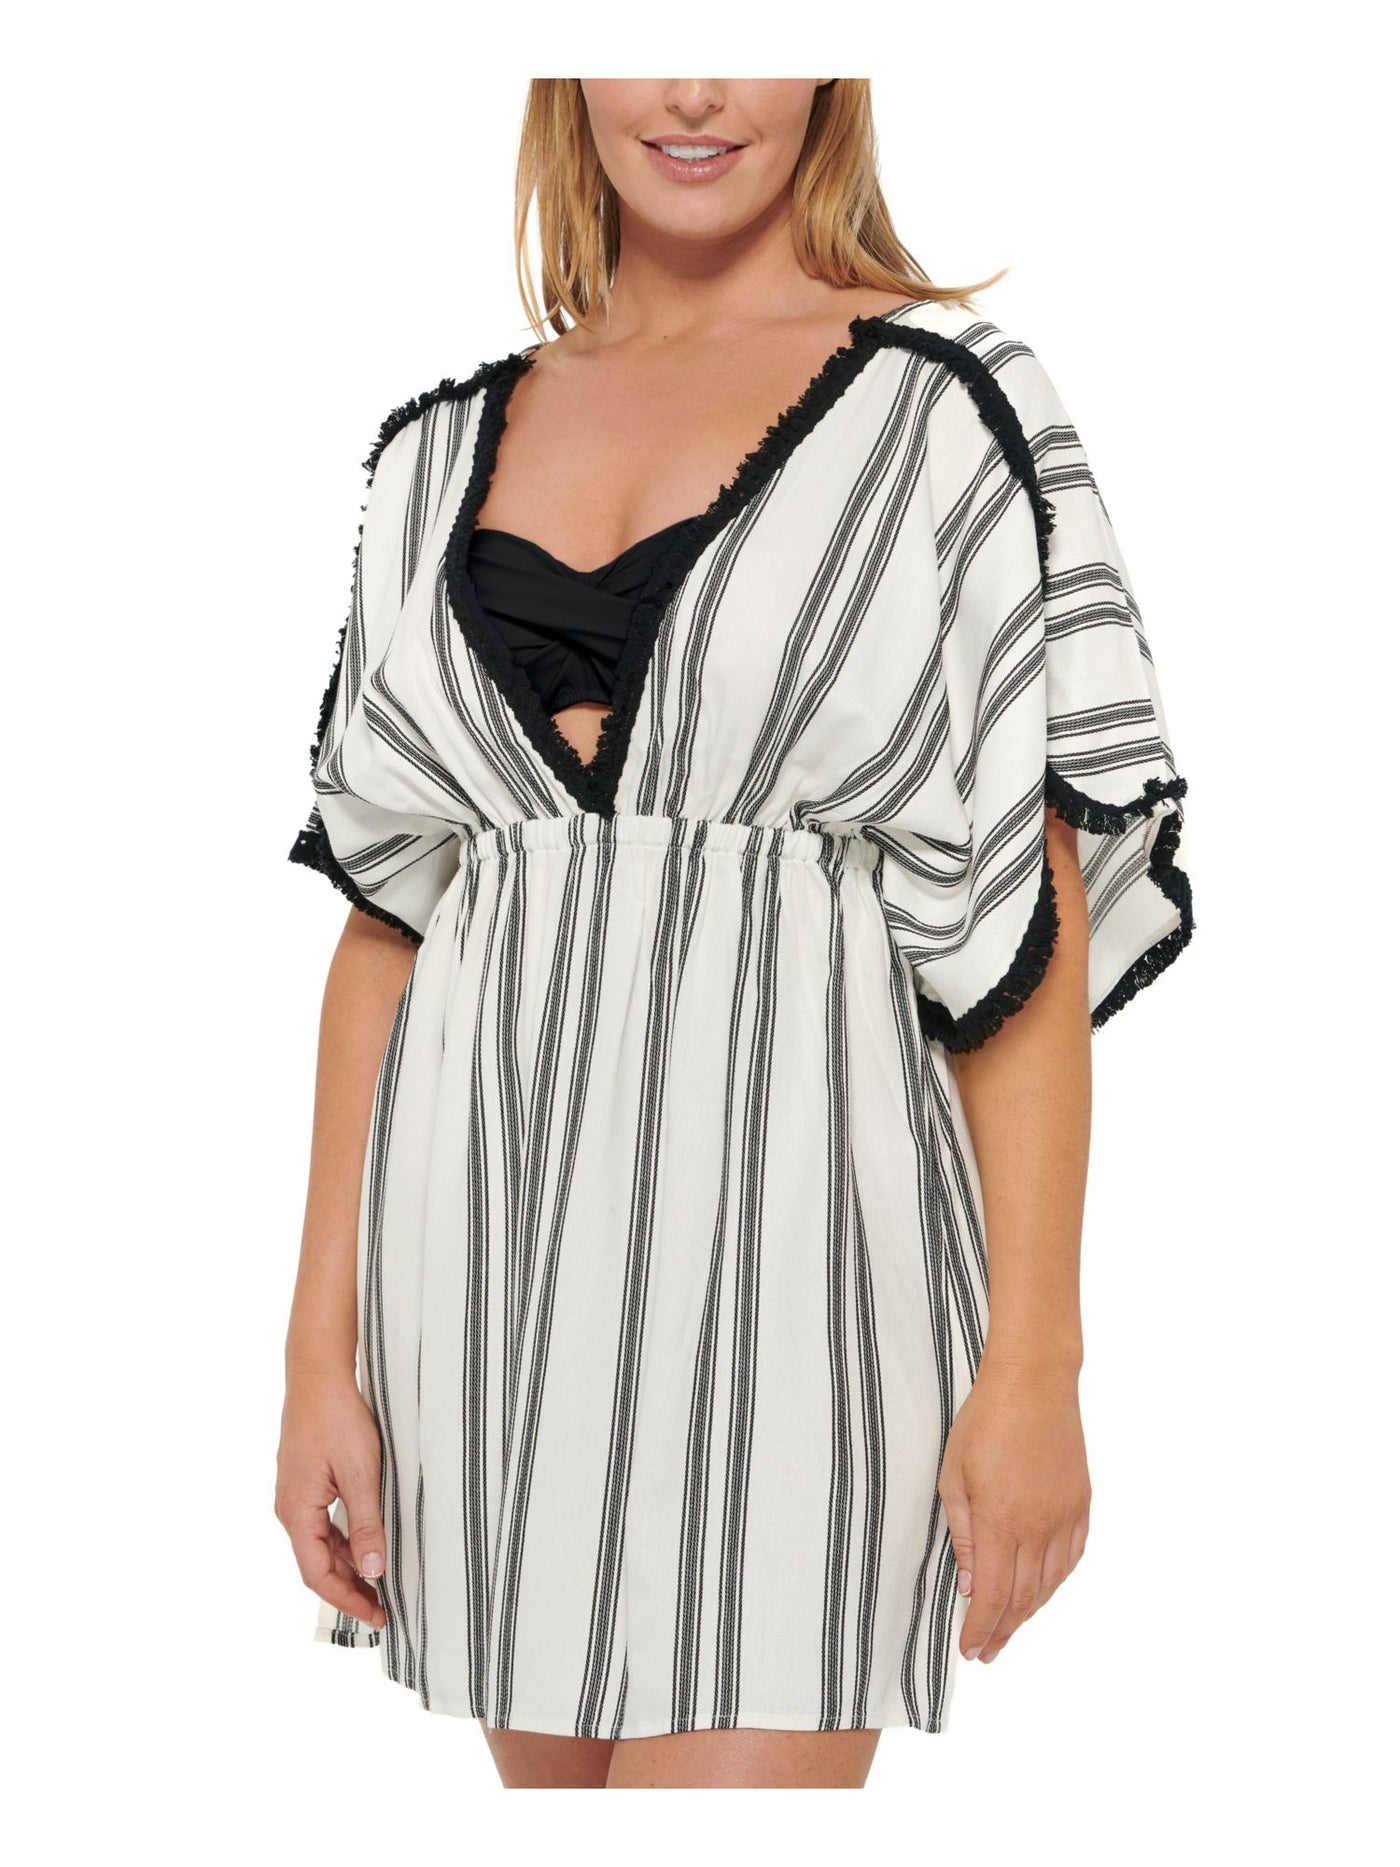 DOTTI Women's White Striped Fringed-Trim Dress Deep V Neck Tie Newport Swimsuit Cover Up S